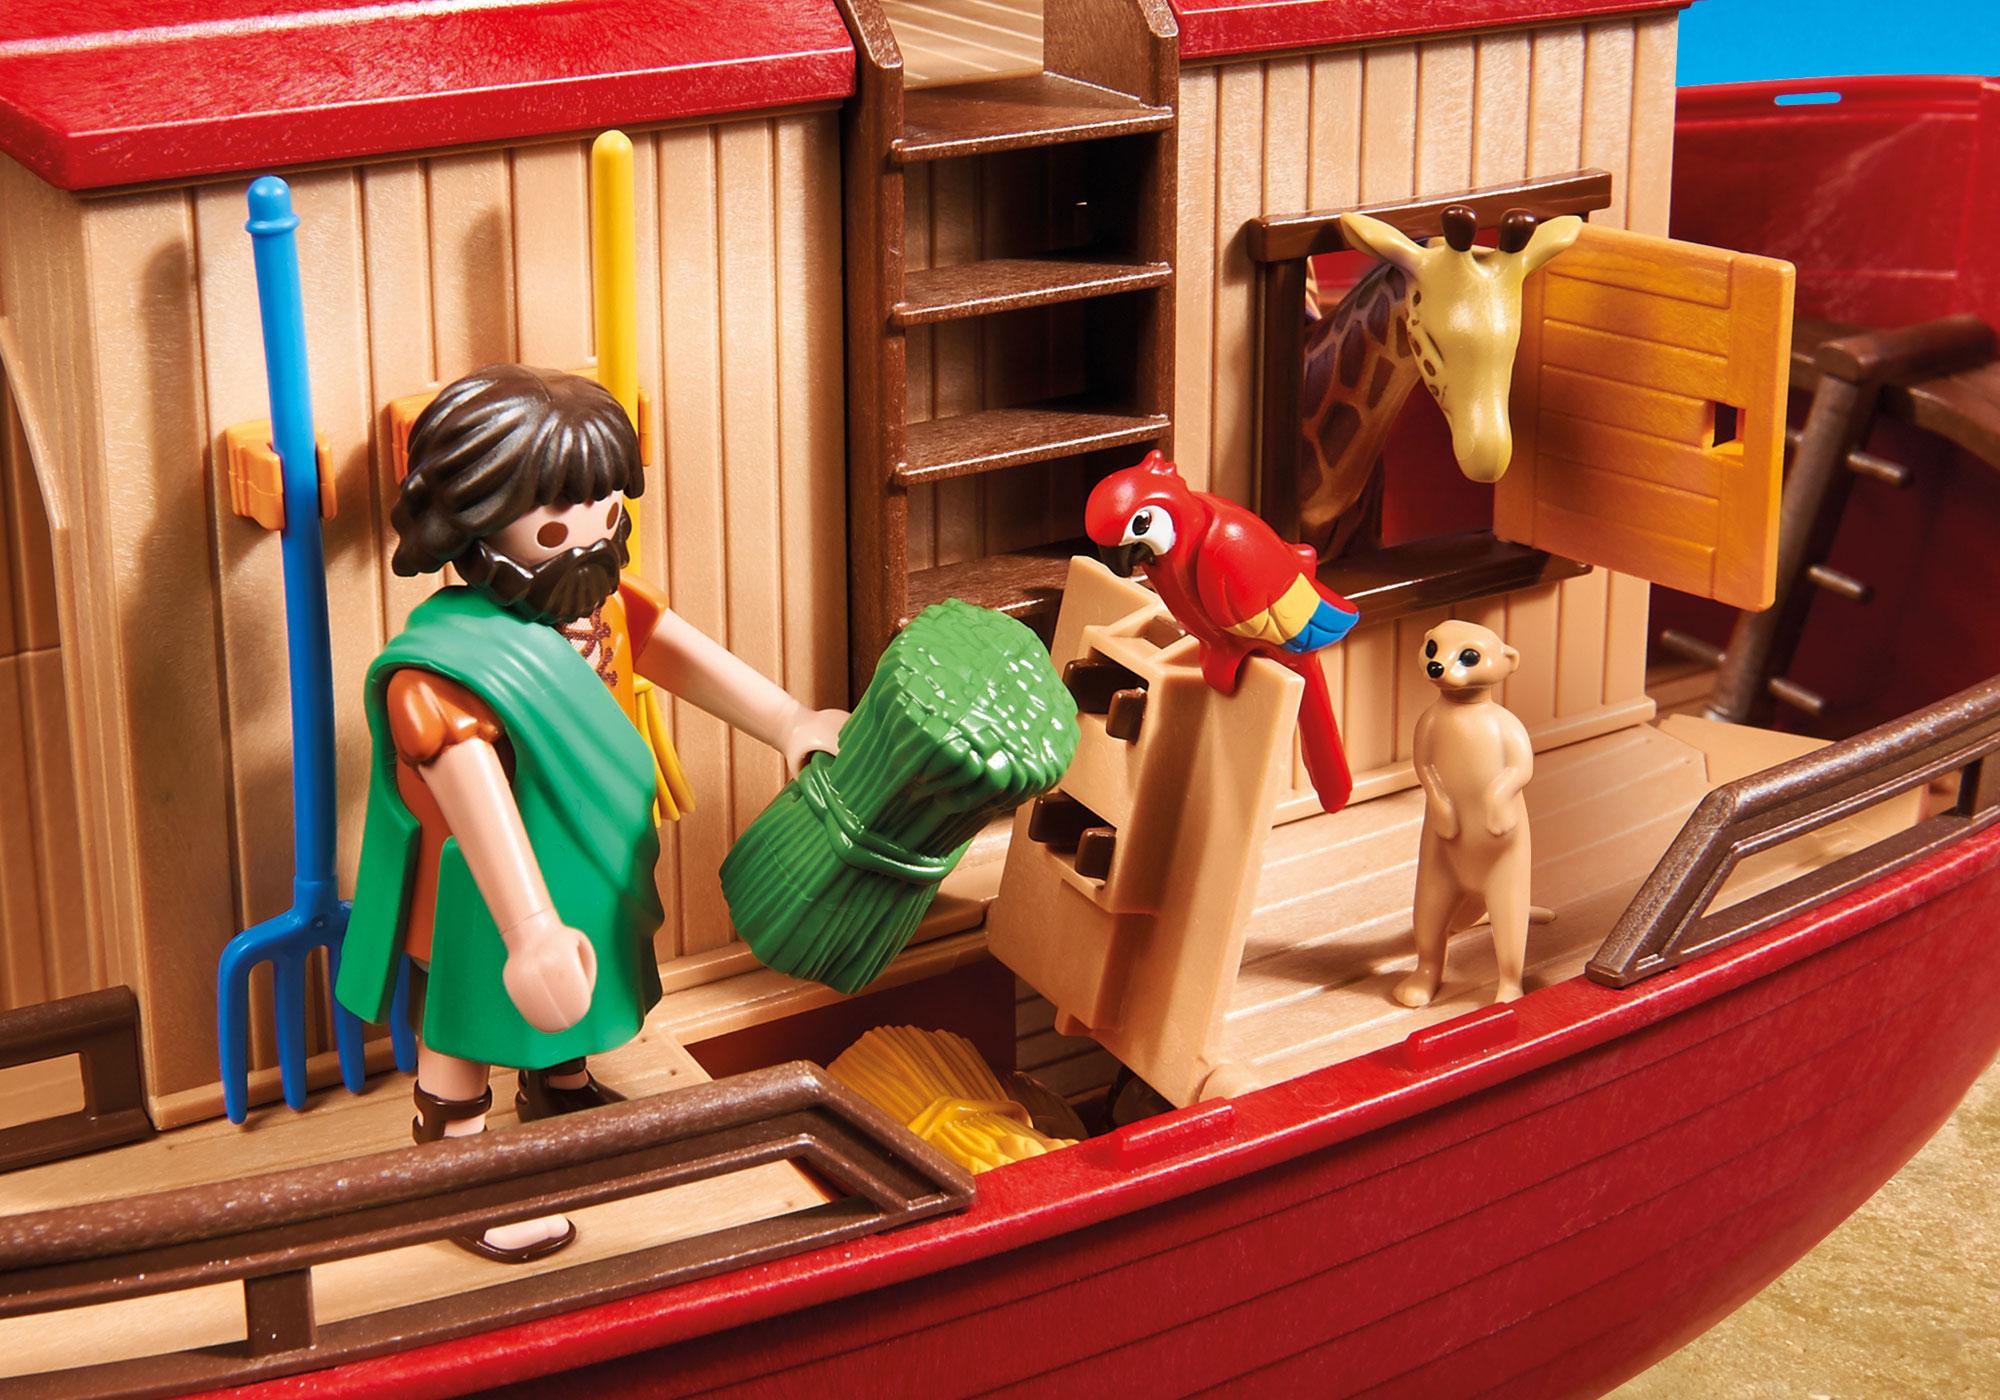 playmobil bateau animaux